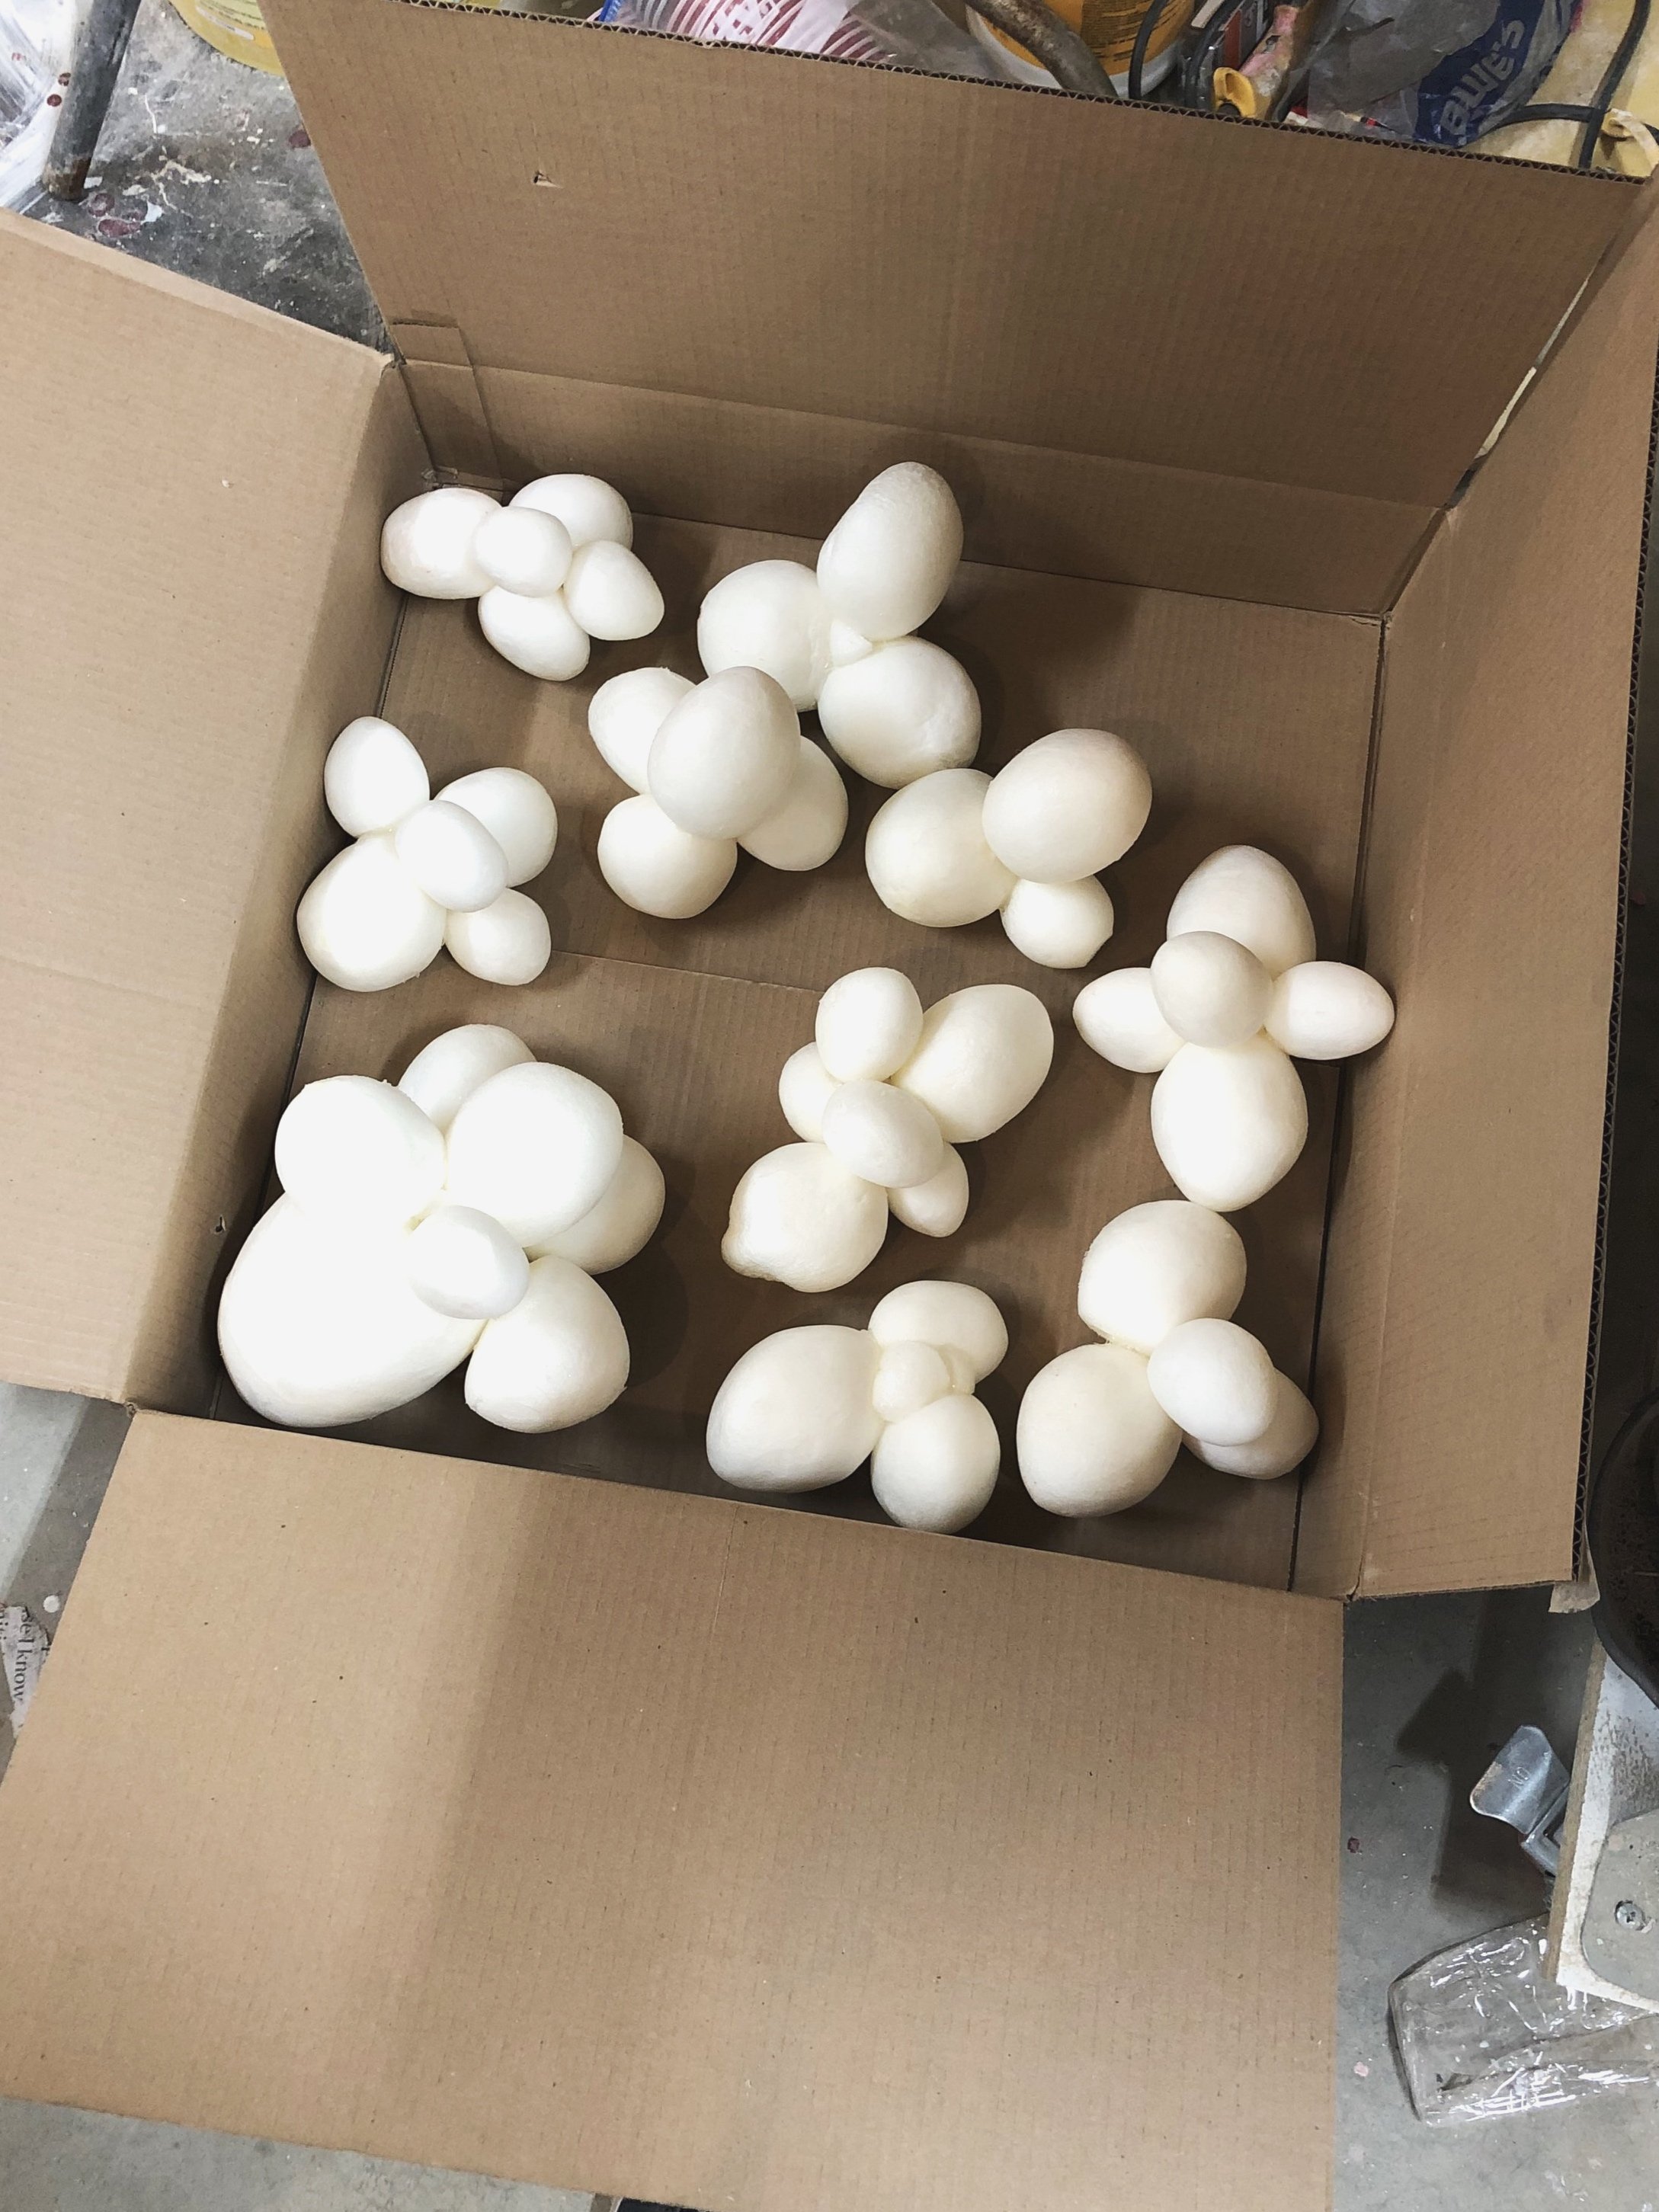 Fake giant yeast blobs made of squishy foam